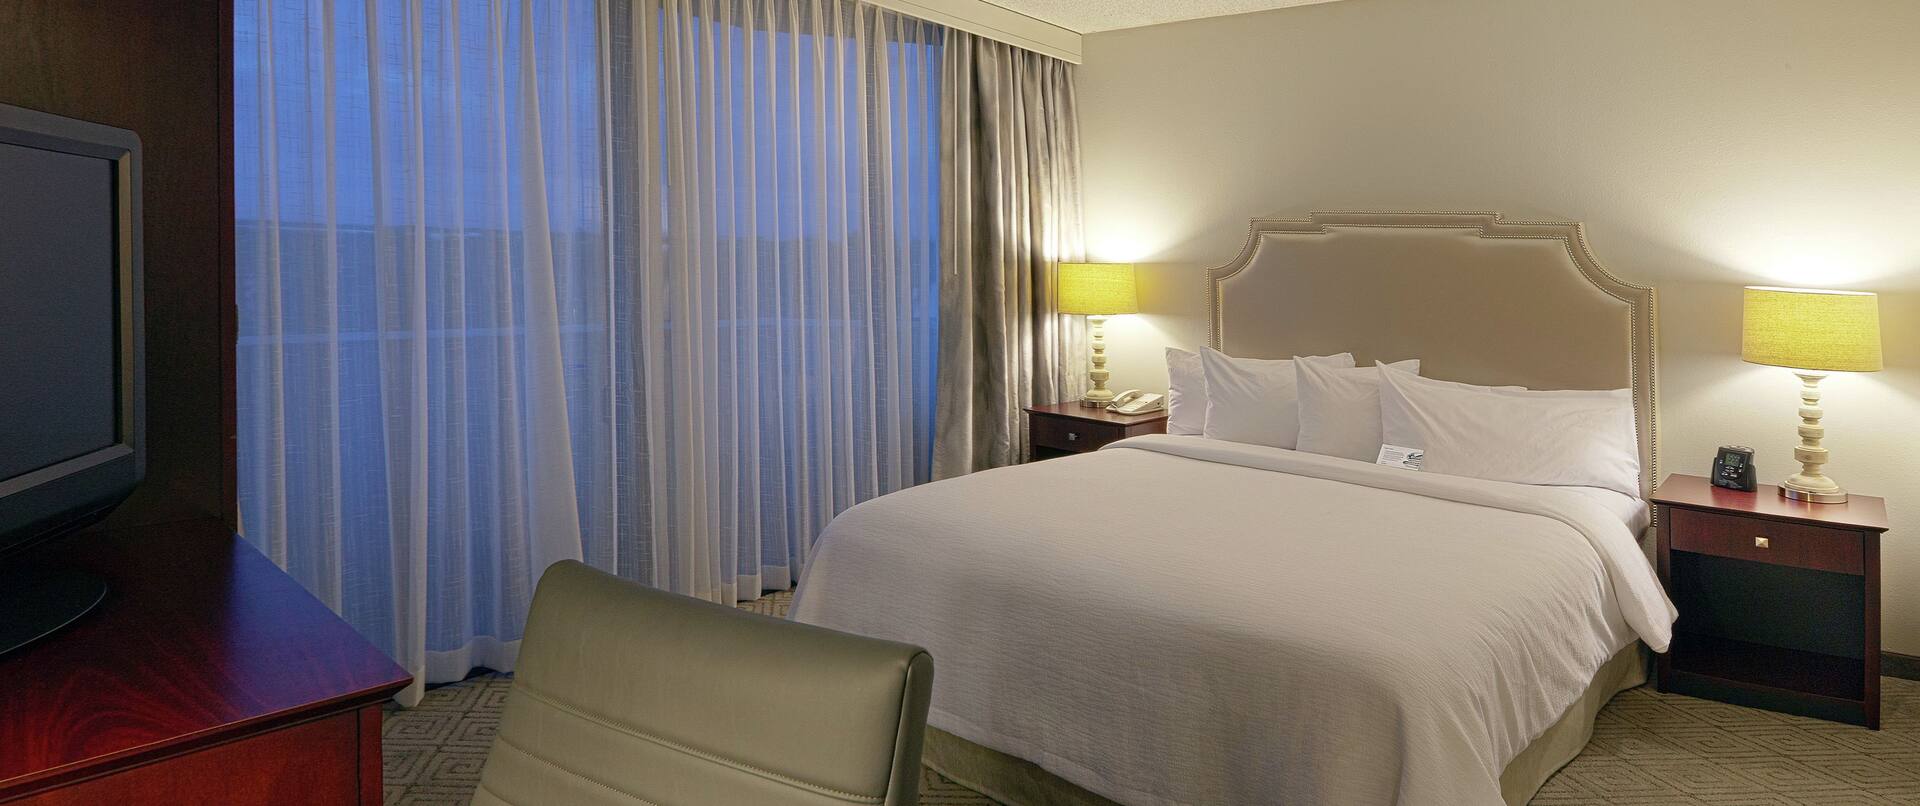 King Bed Hotel Guestroom Suite